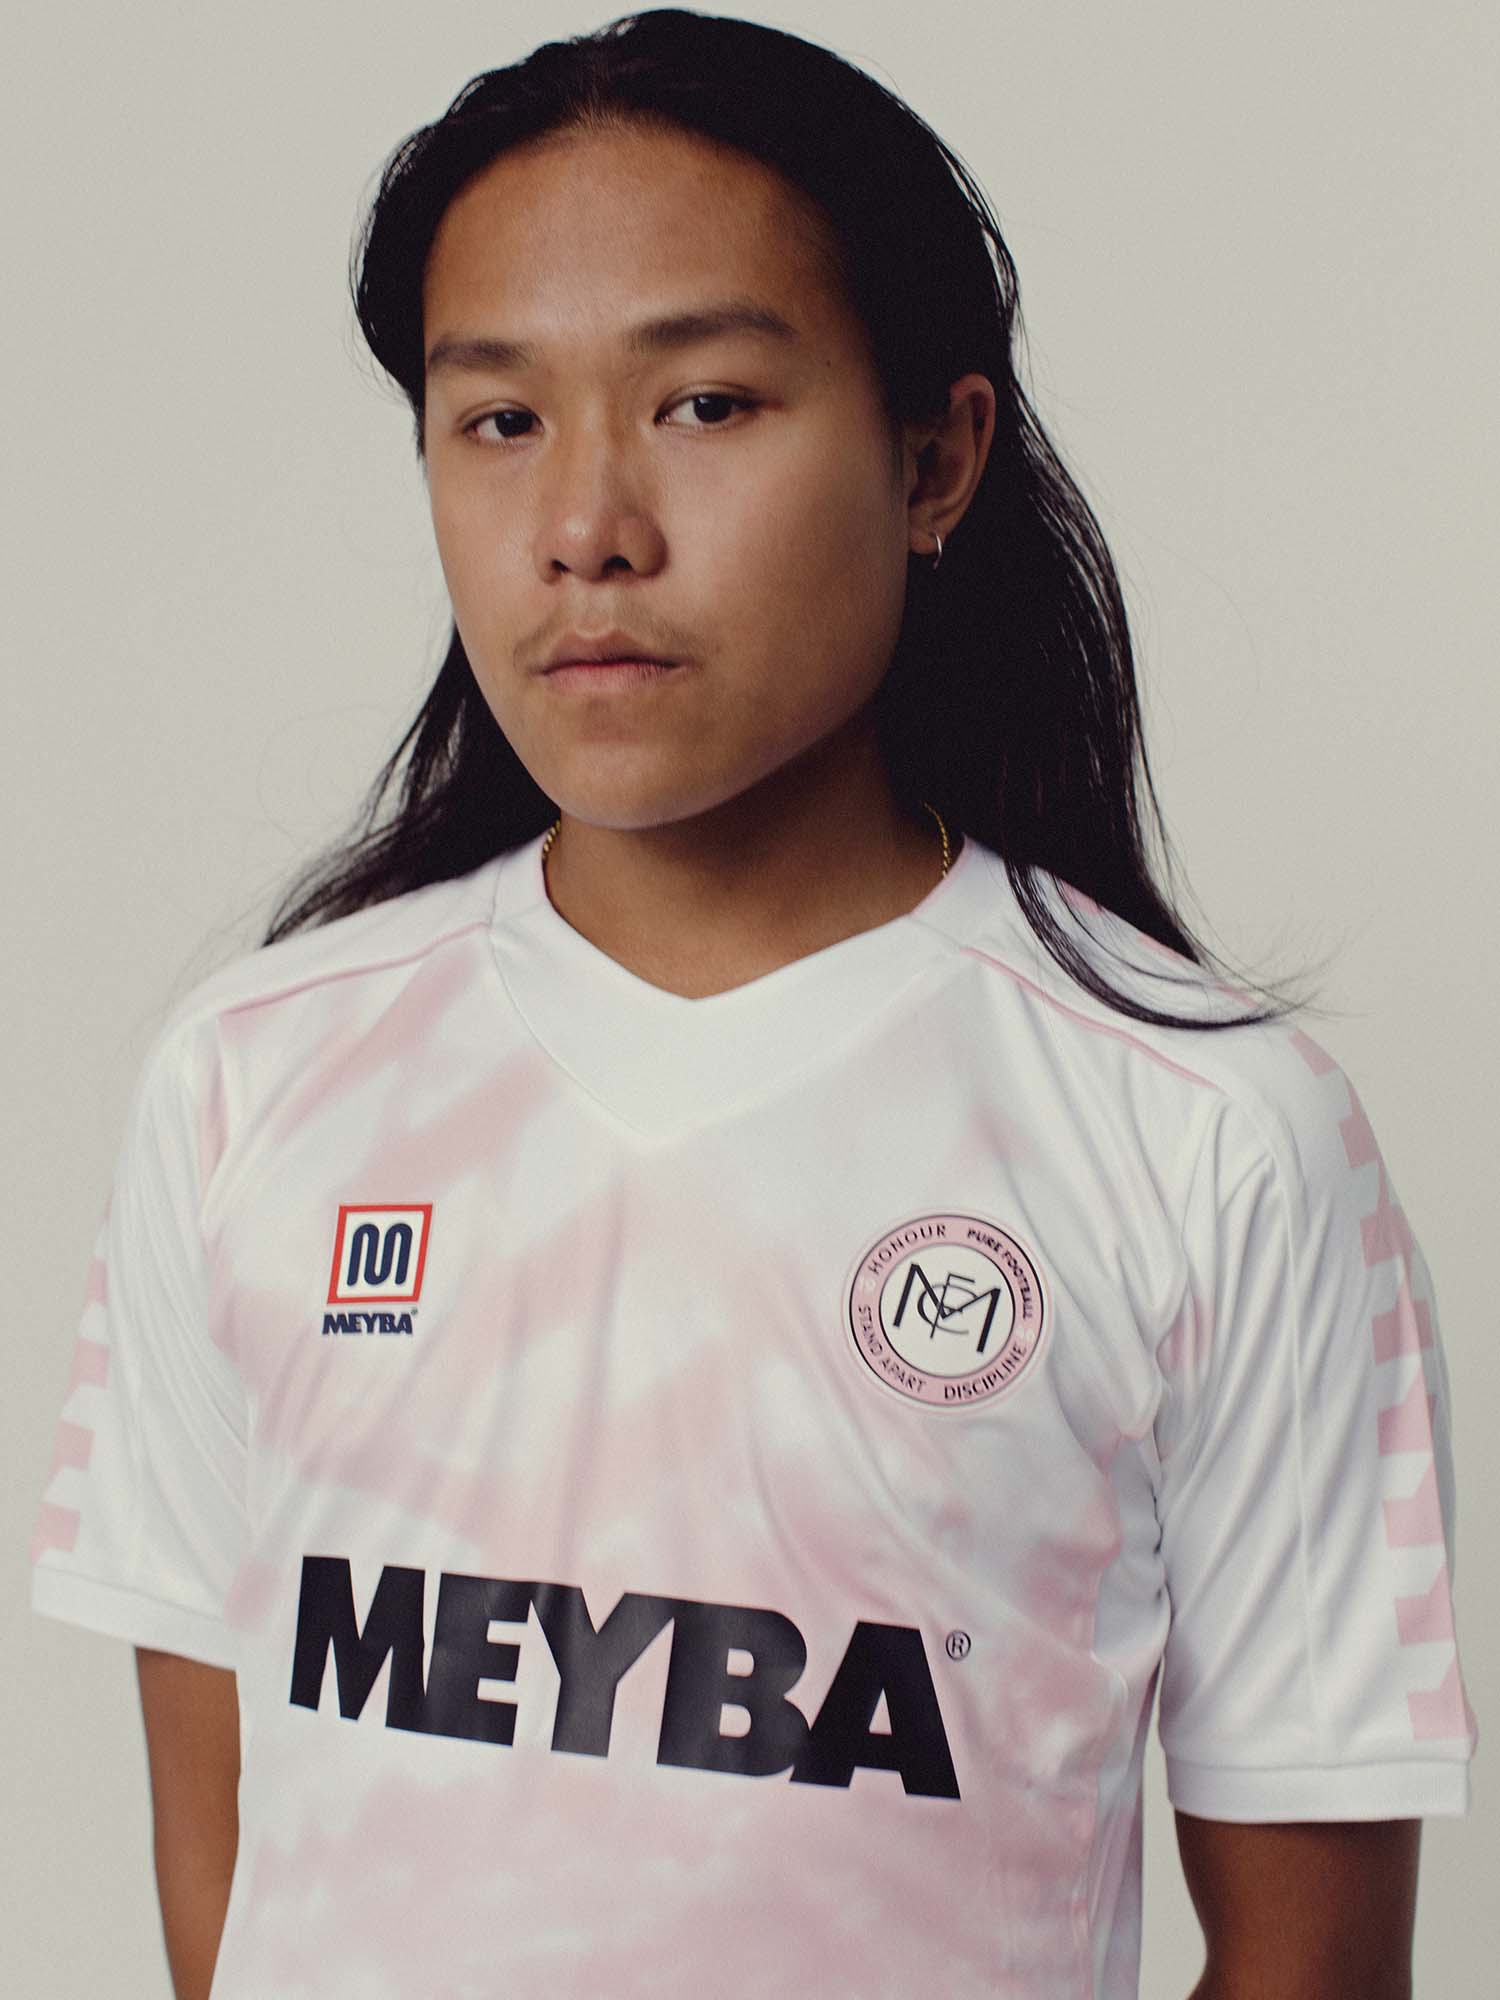 Meyba launch portrait soccerbible_0001_IMG_8651-Edit.jpg